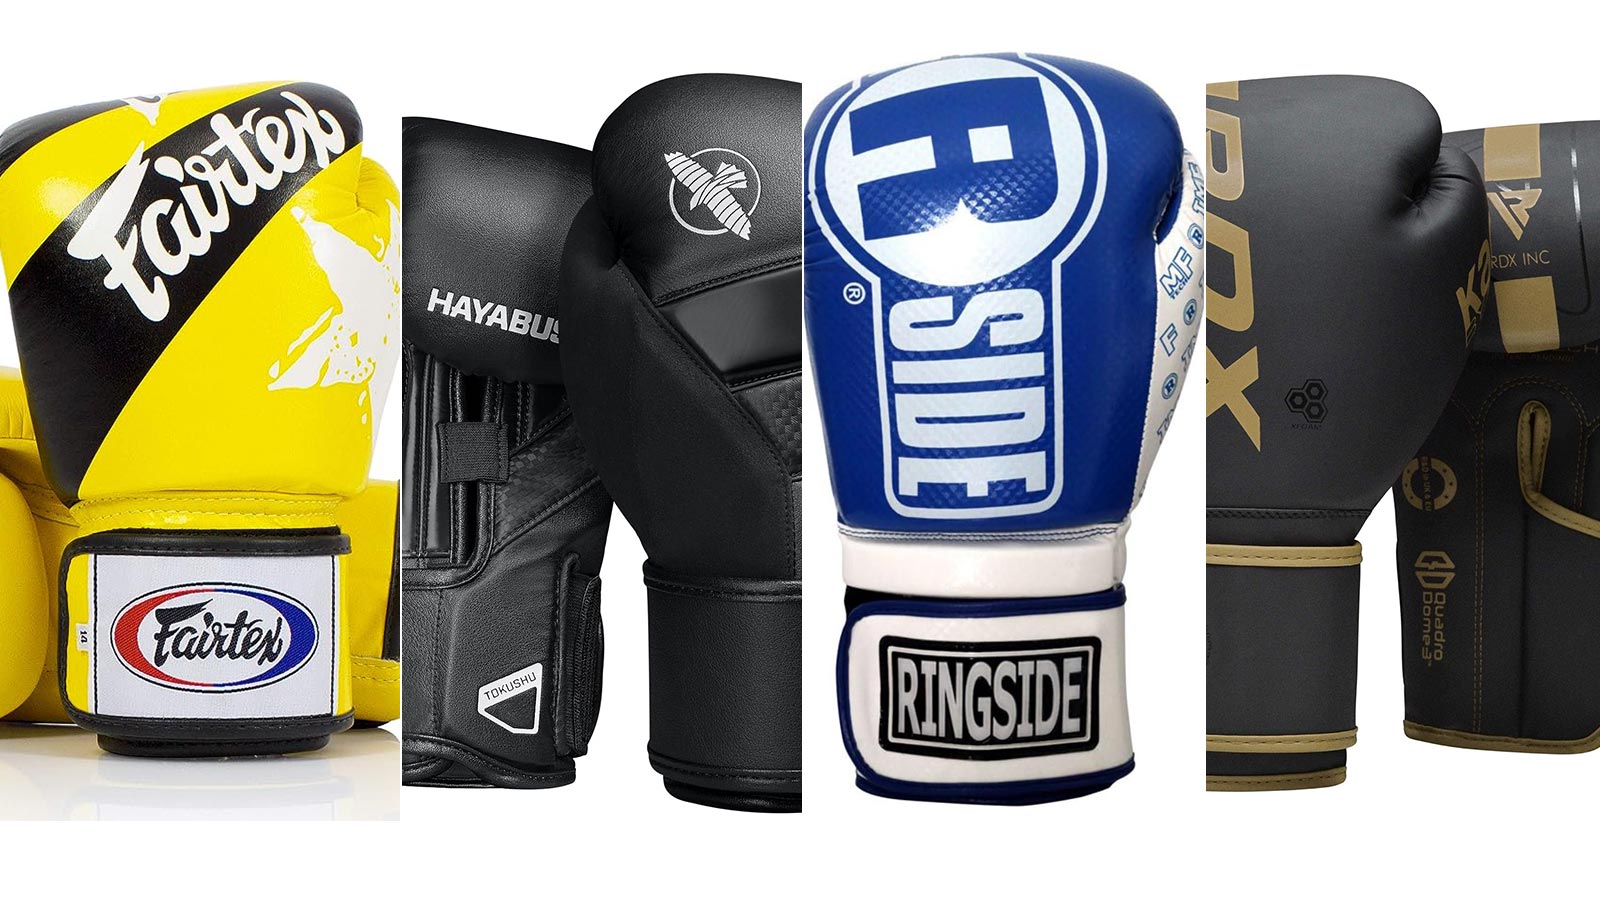 16 oz pro boxing gloves, best boxing gloves